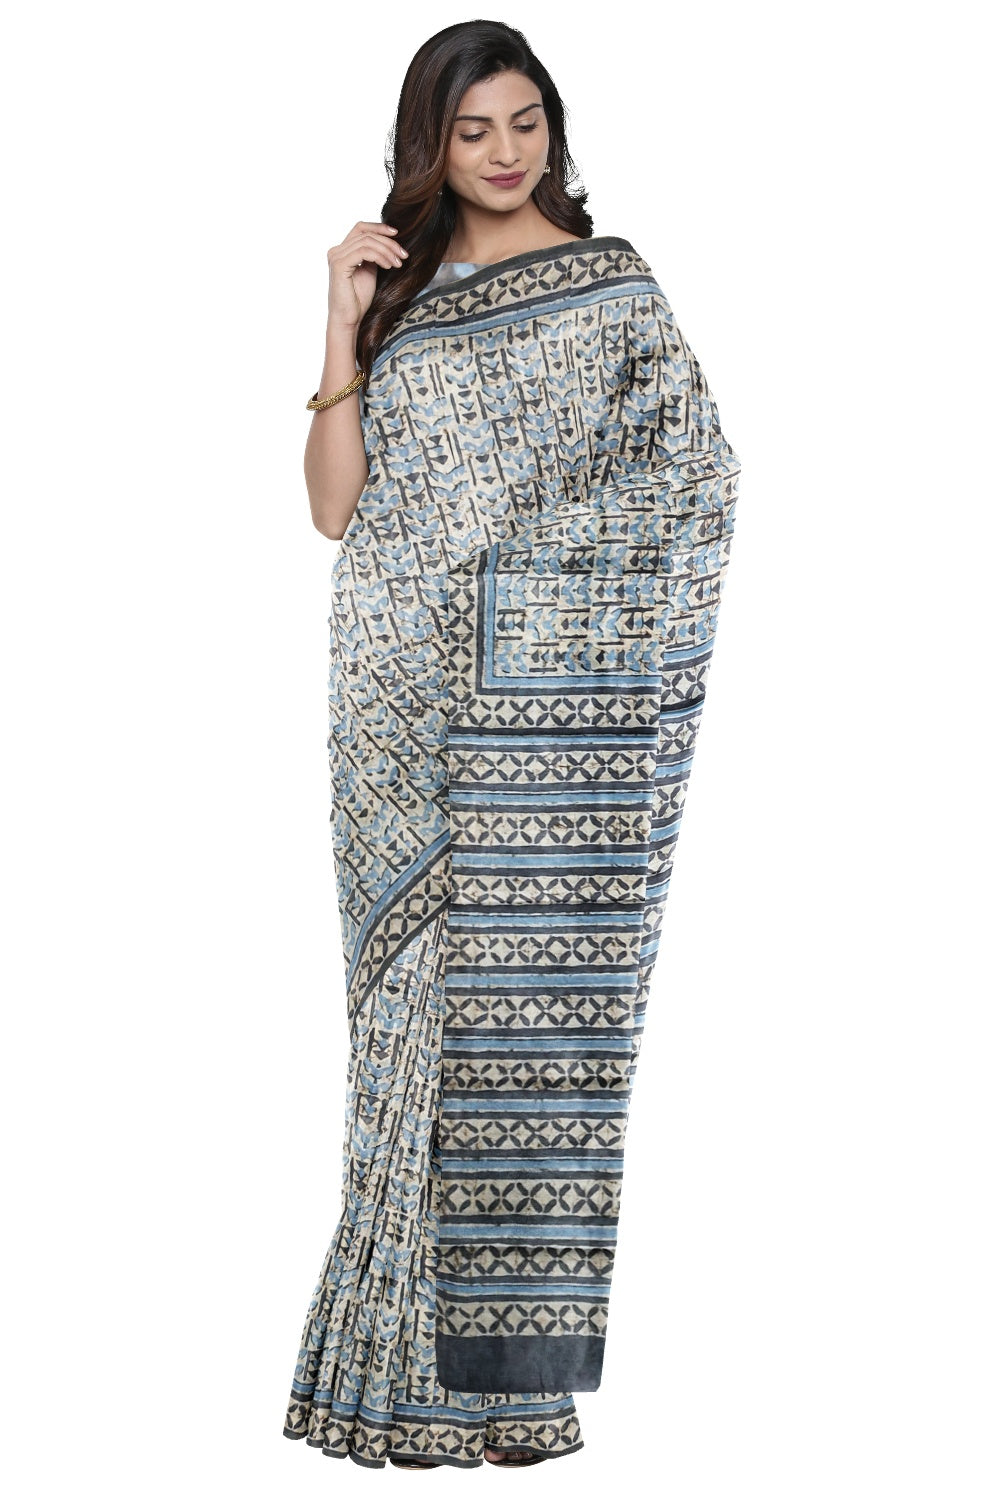 Southloom Blue Cotton Chanderi Printed Designer Saree